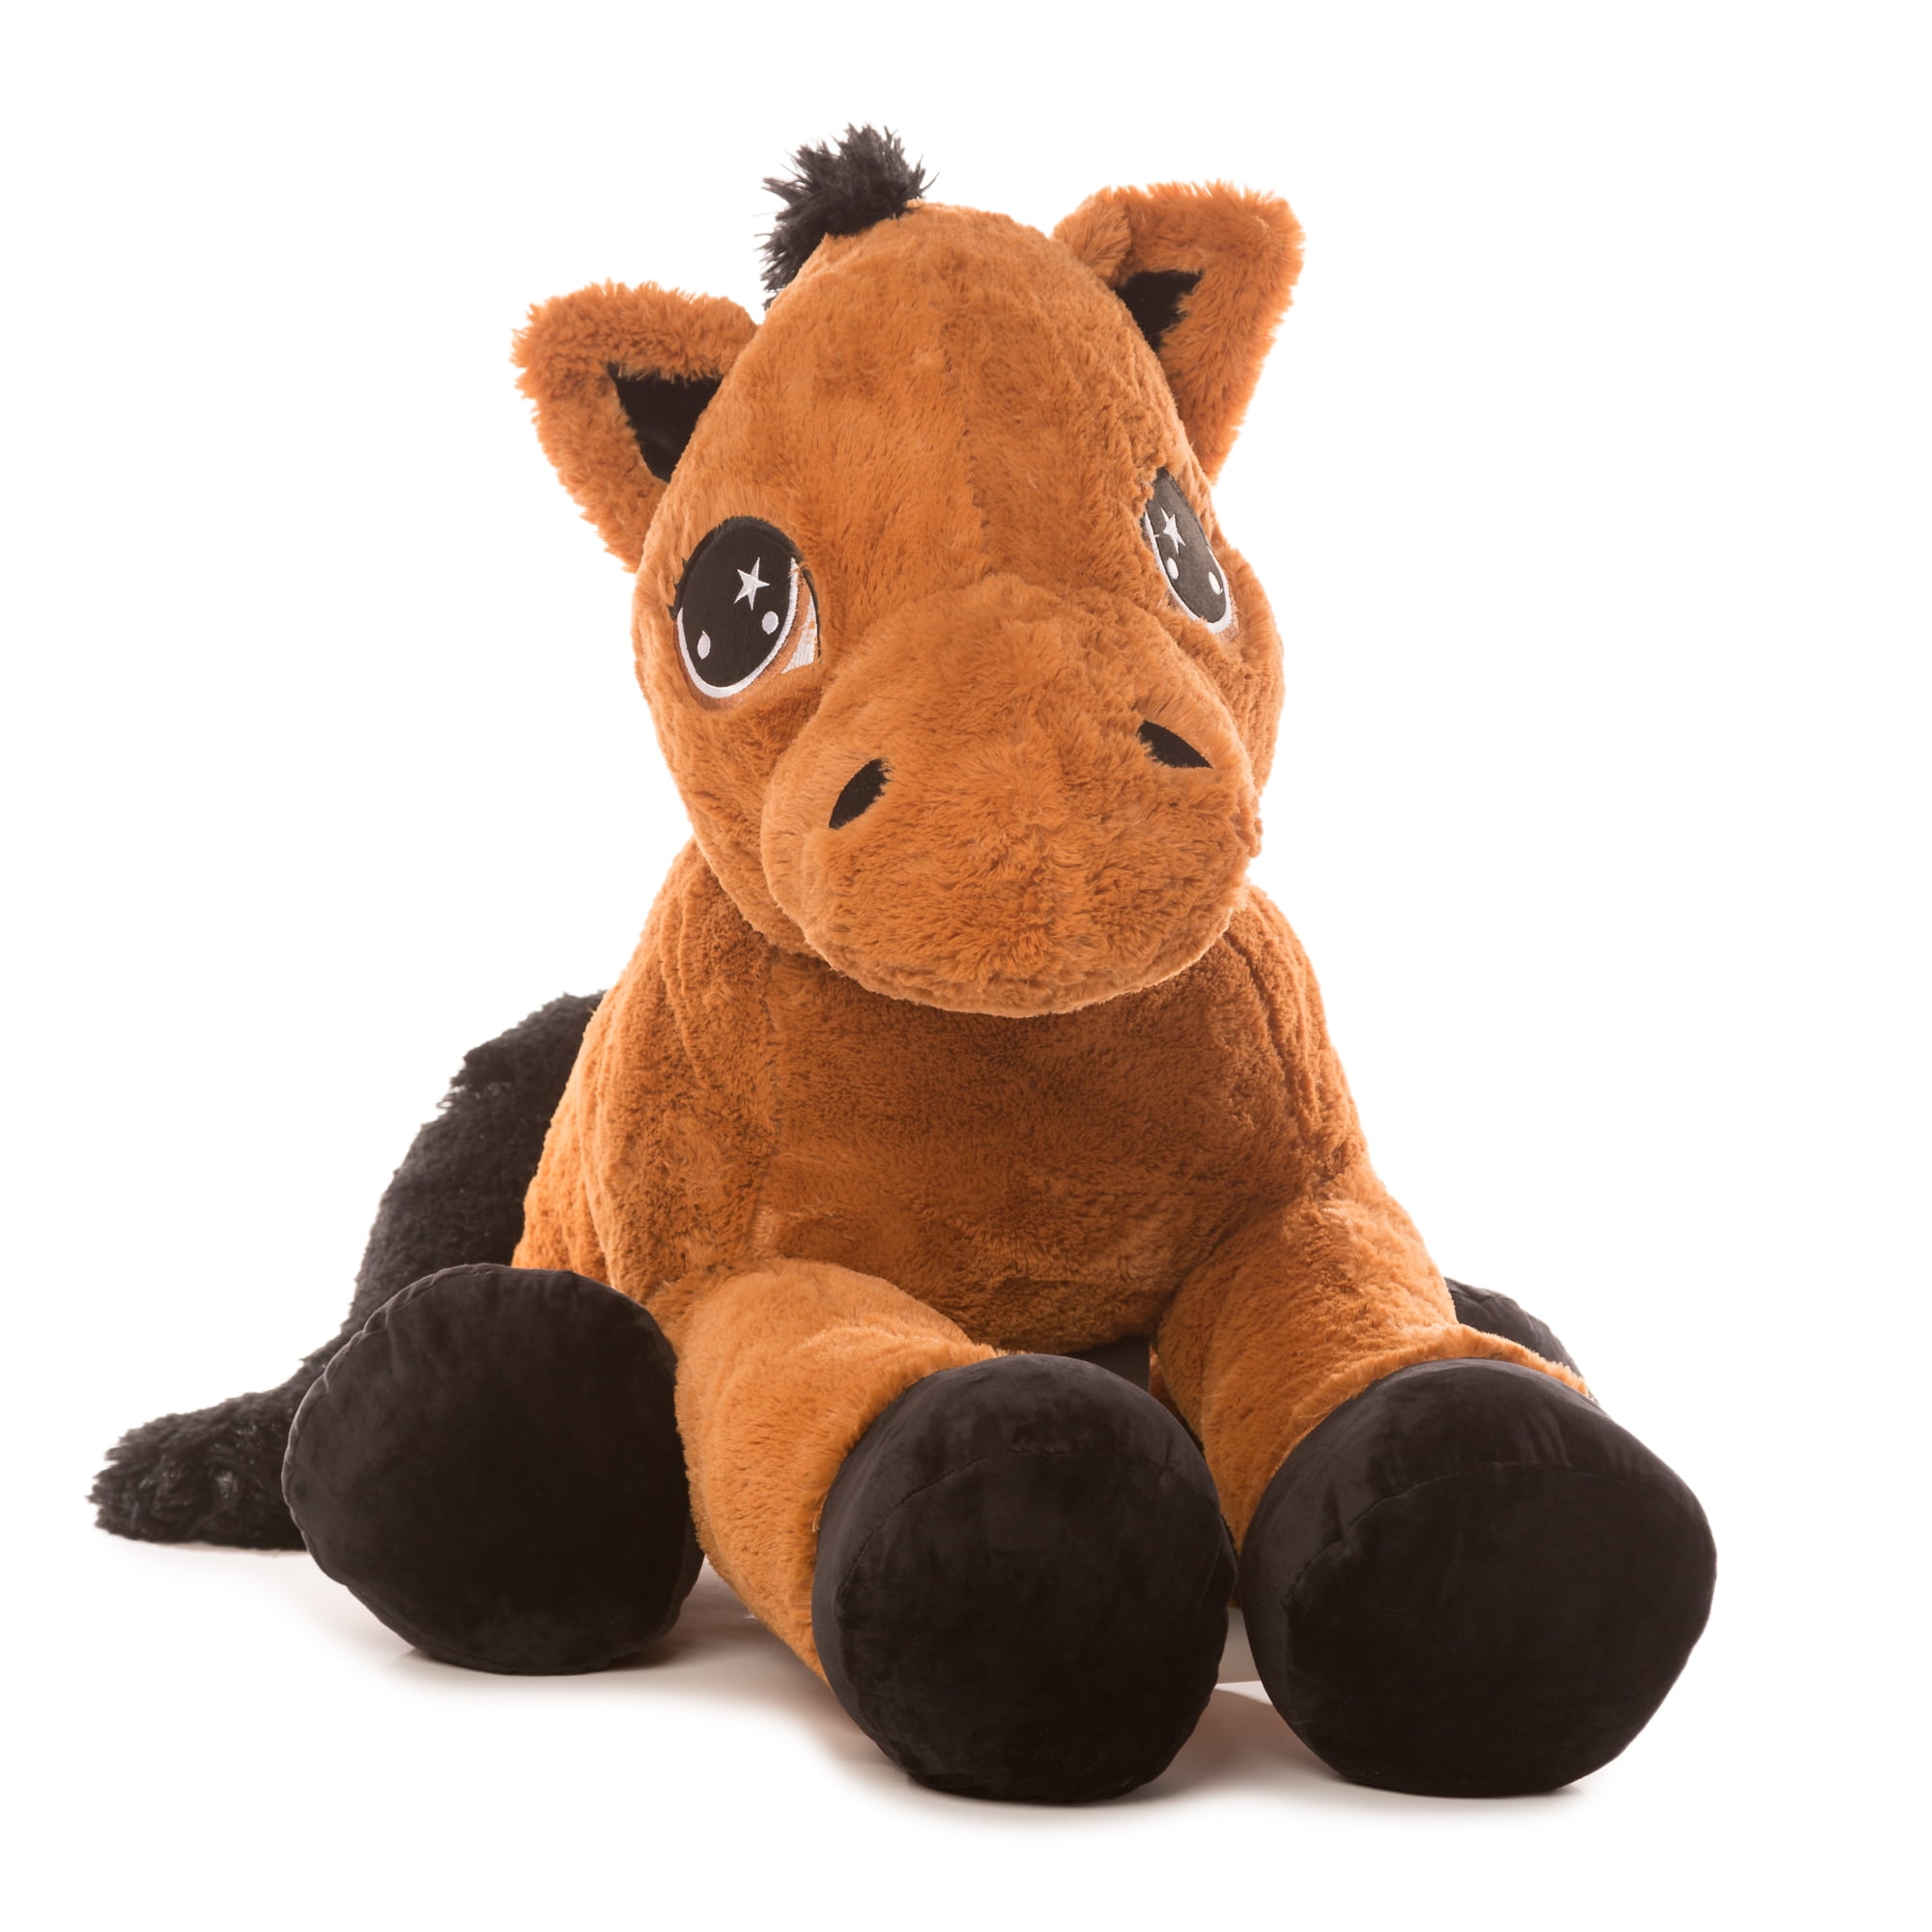 Best Made Toys Jumbo Horse Giant Plush Animal - Over 4 feet tall! -  